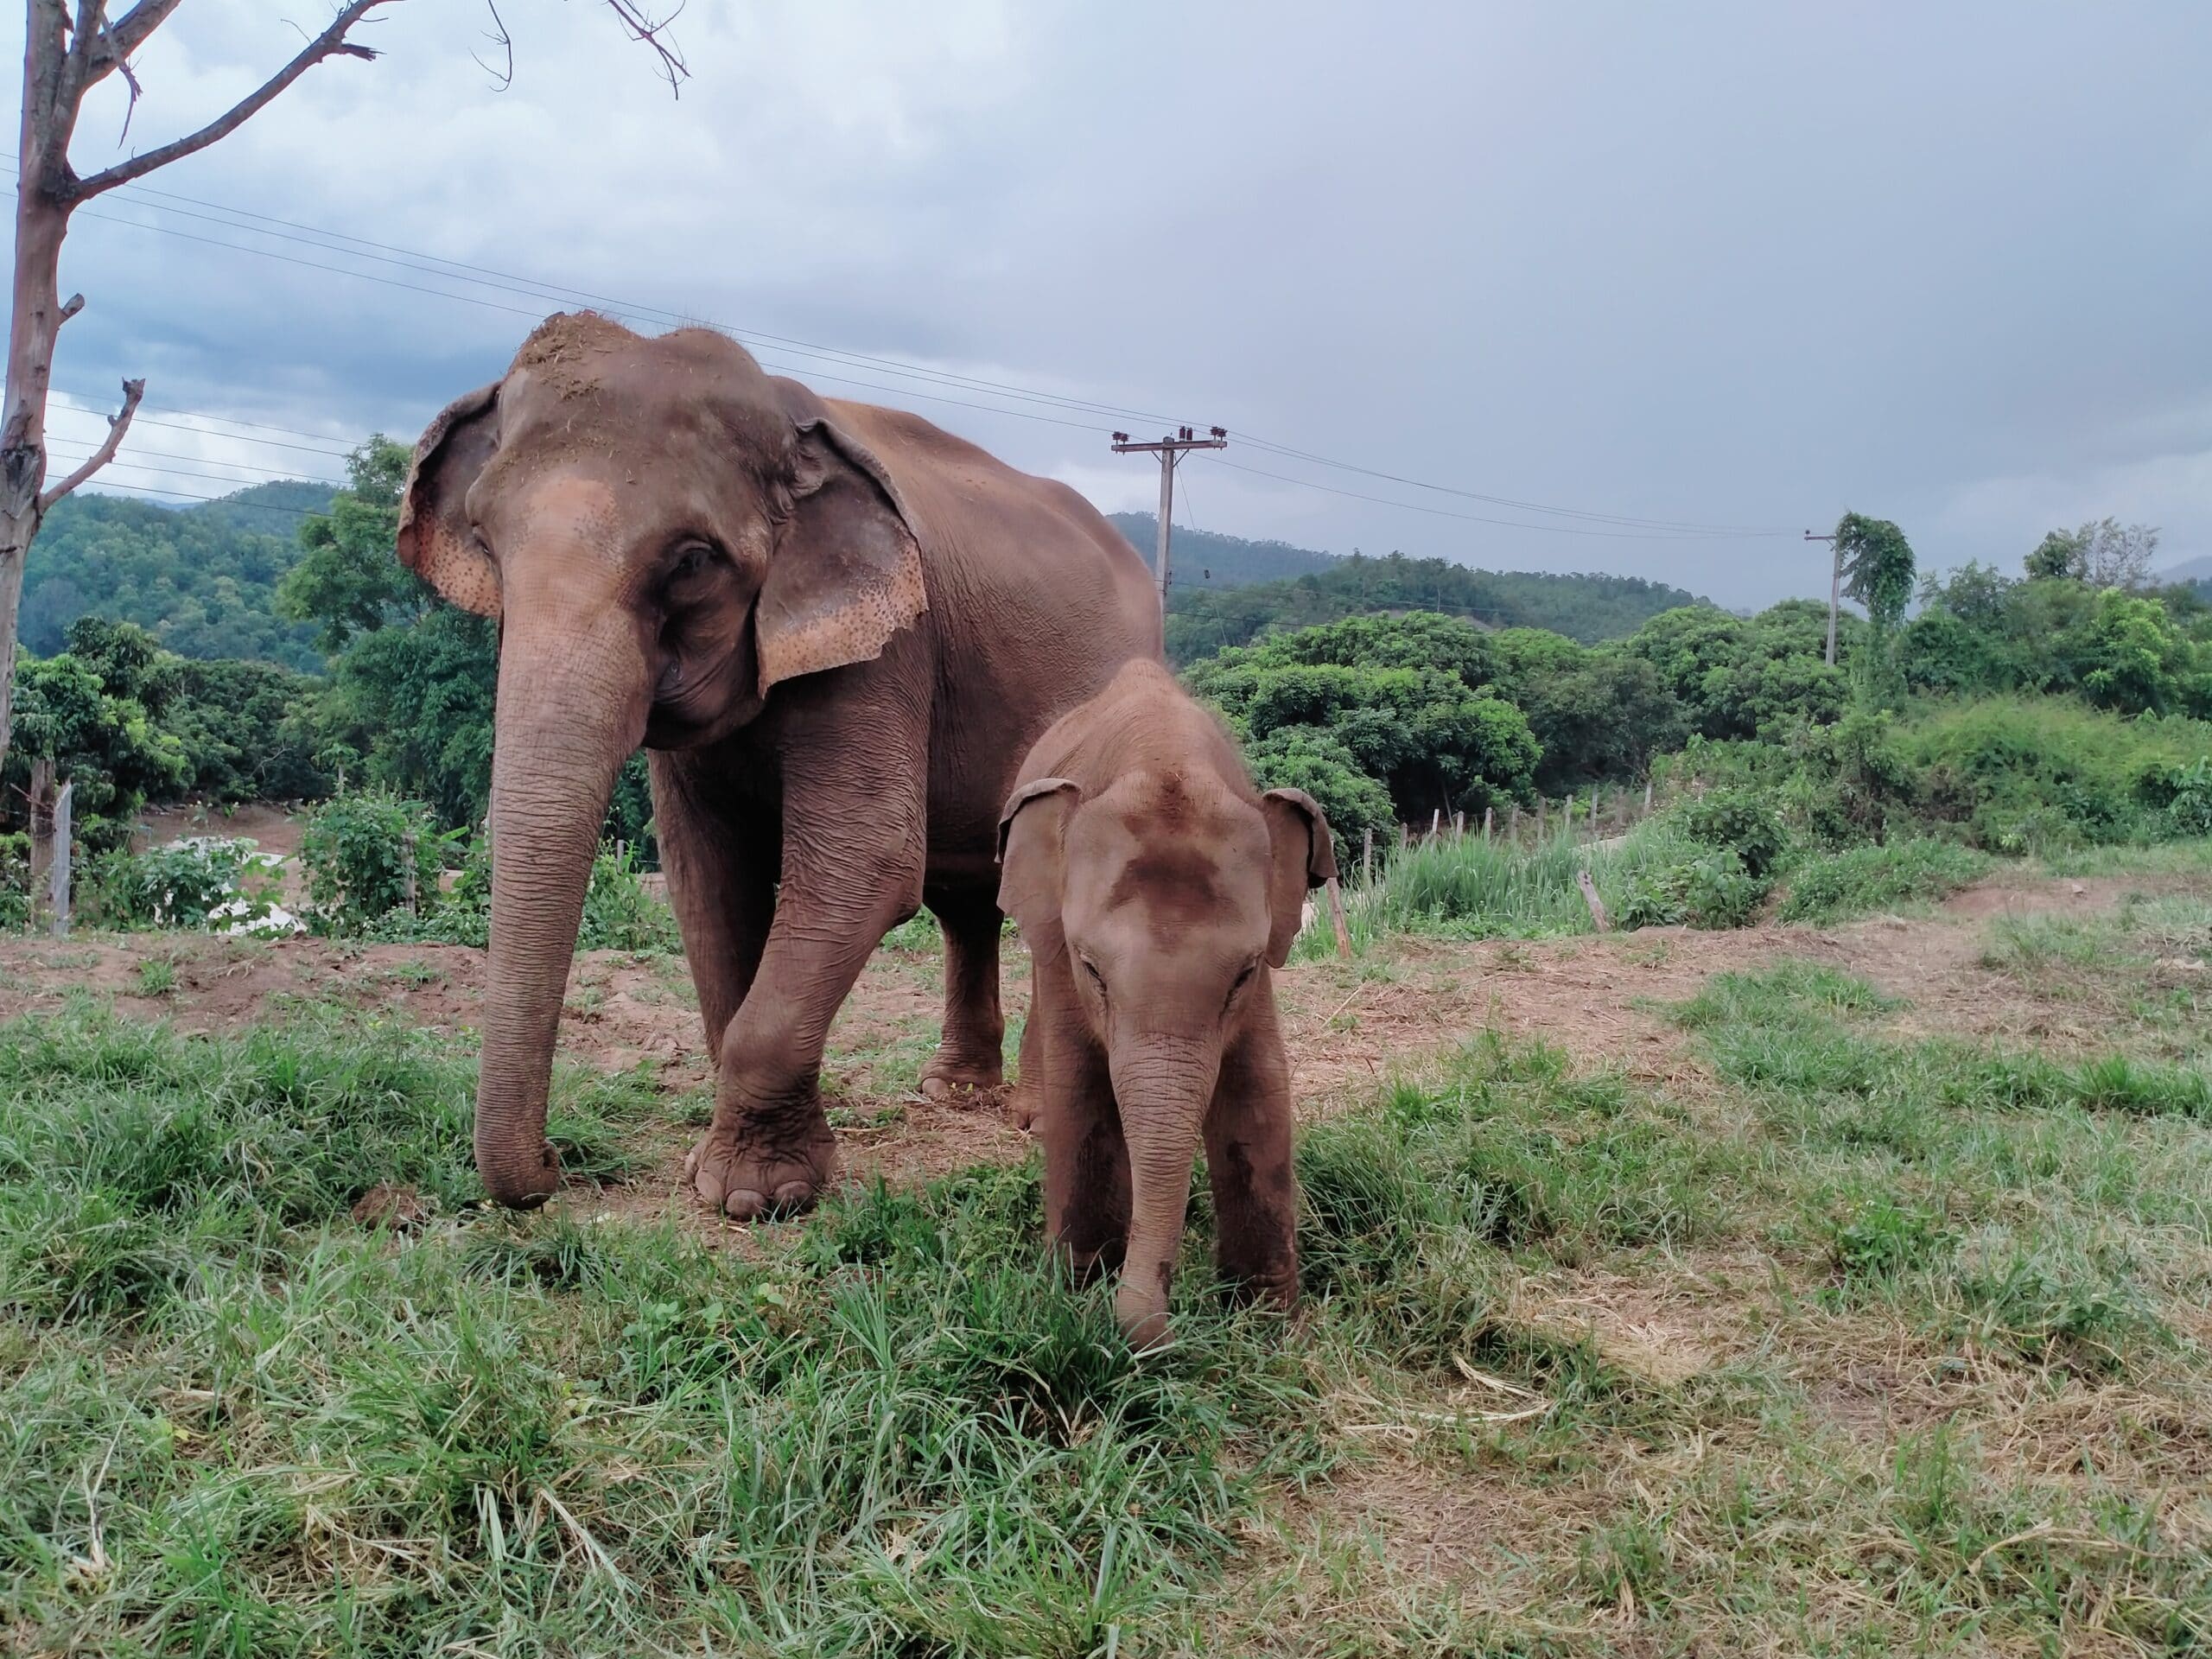 Two Thai elephants walking towards the camera